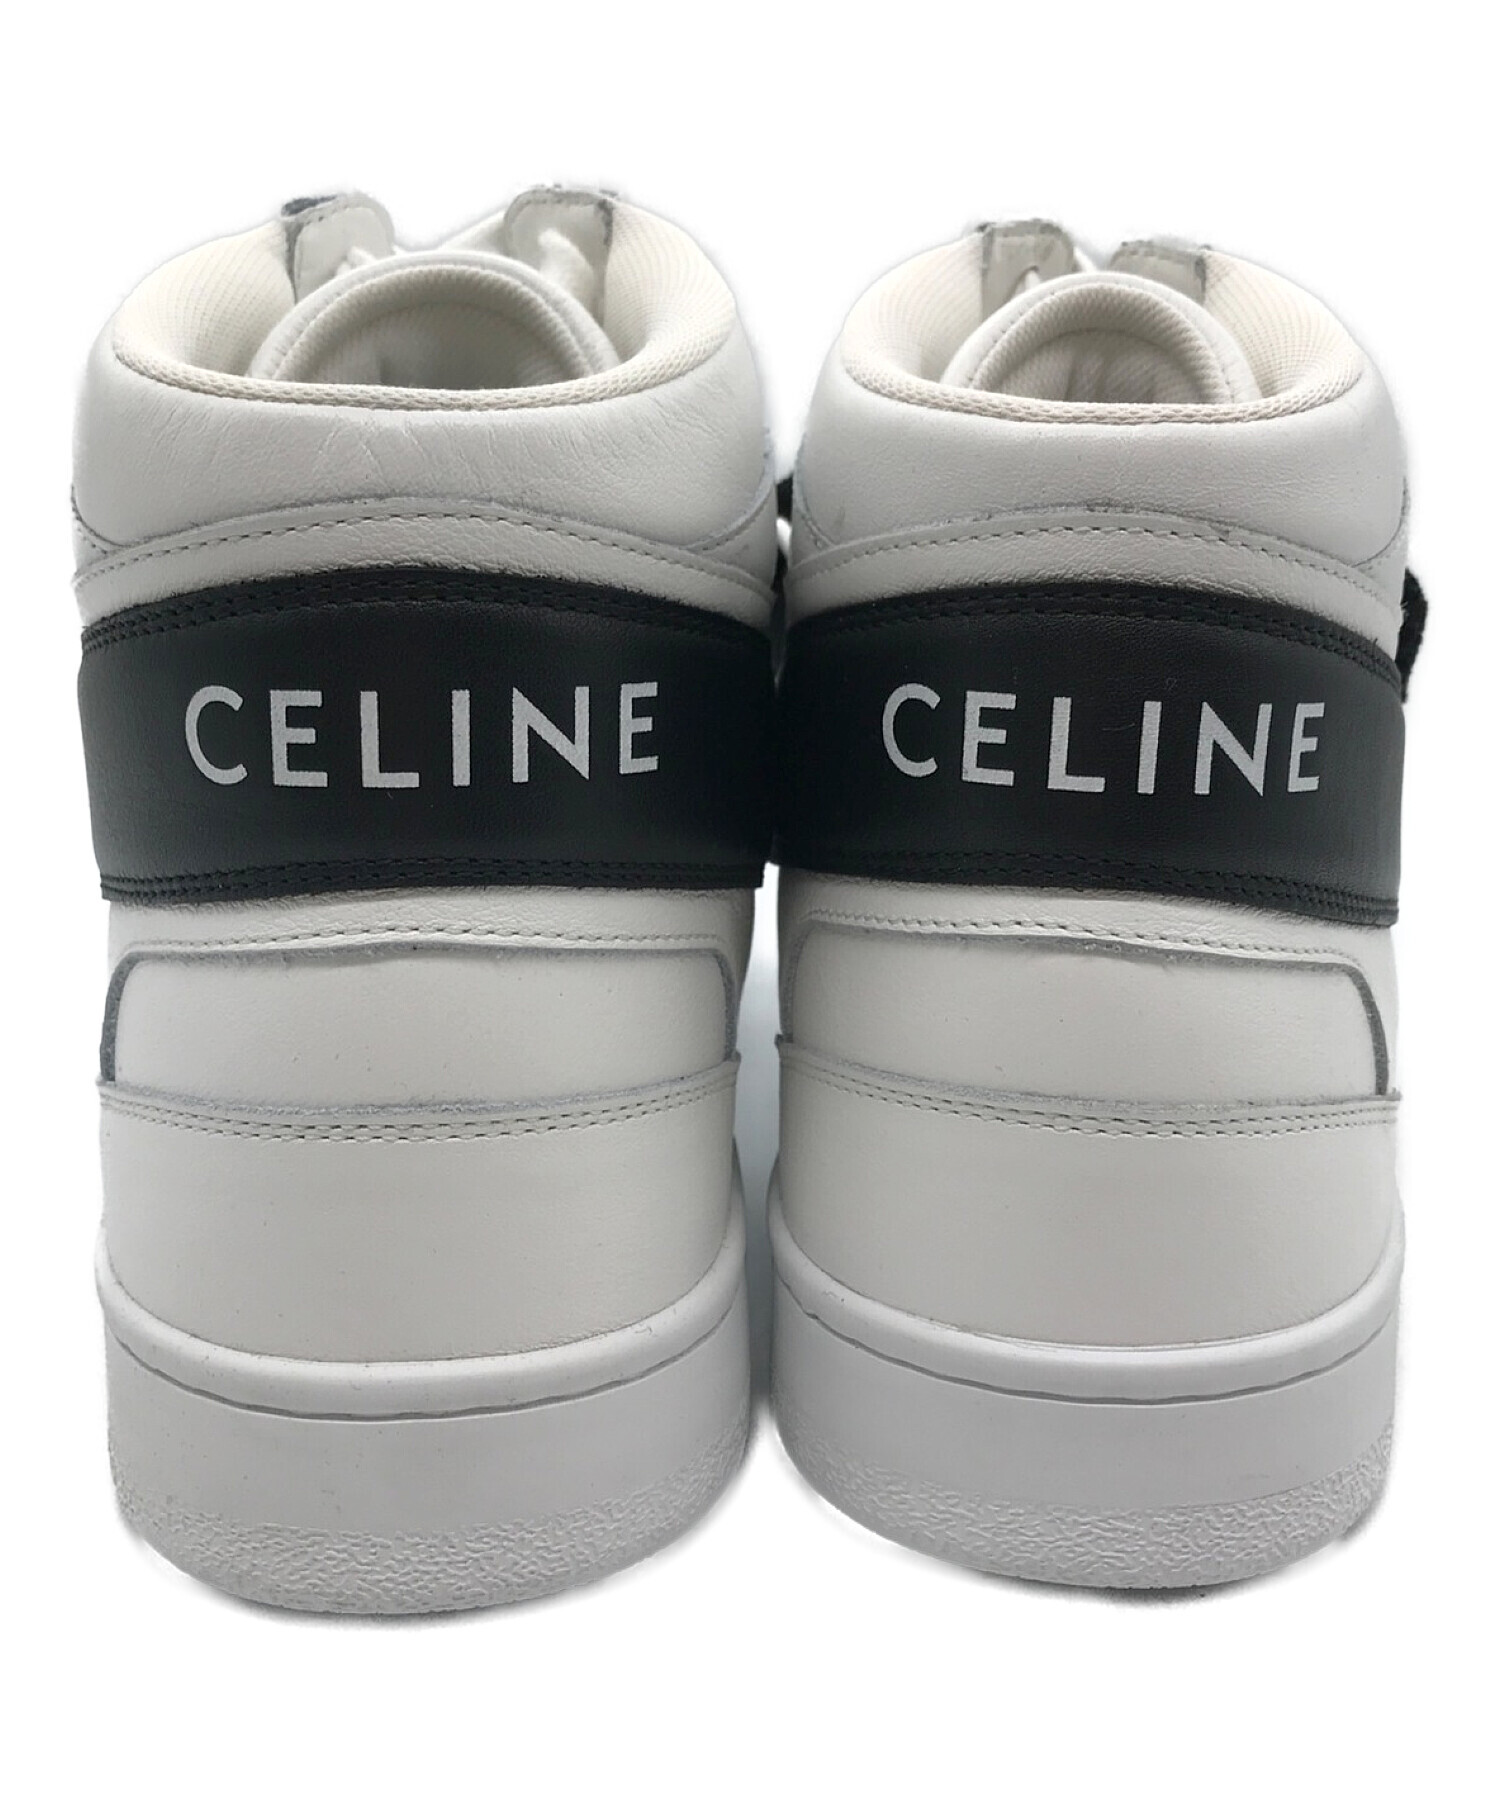 CELINE (セリーヌ) ベルクロハイカットスニーカー ホワイト×ブラック サイズ:SIZE 42